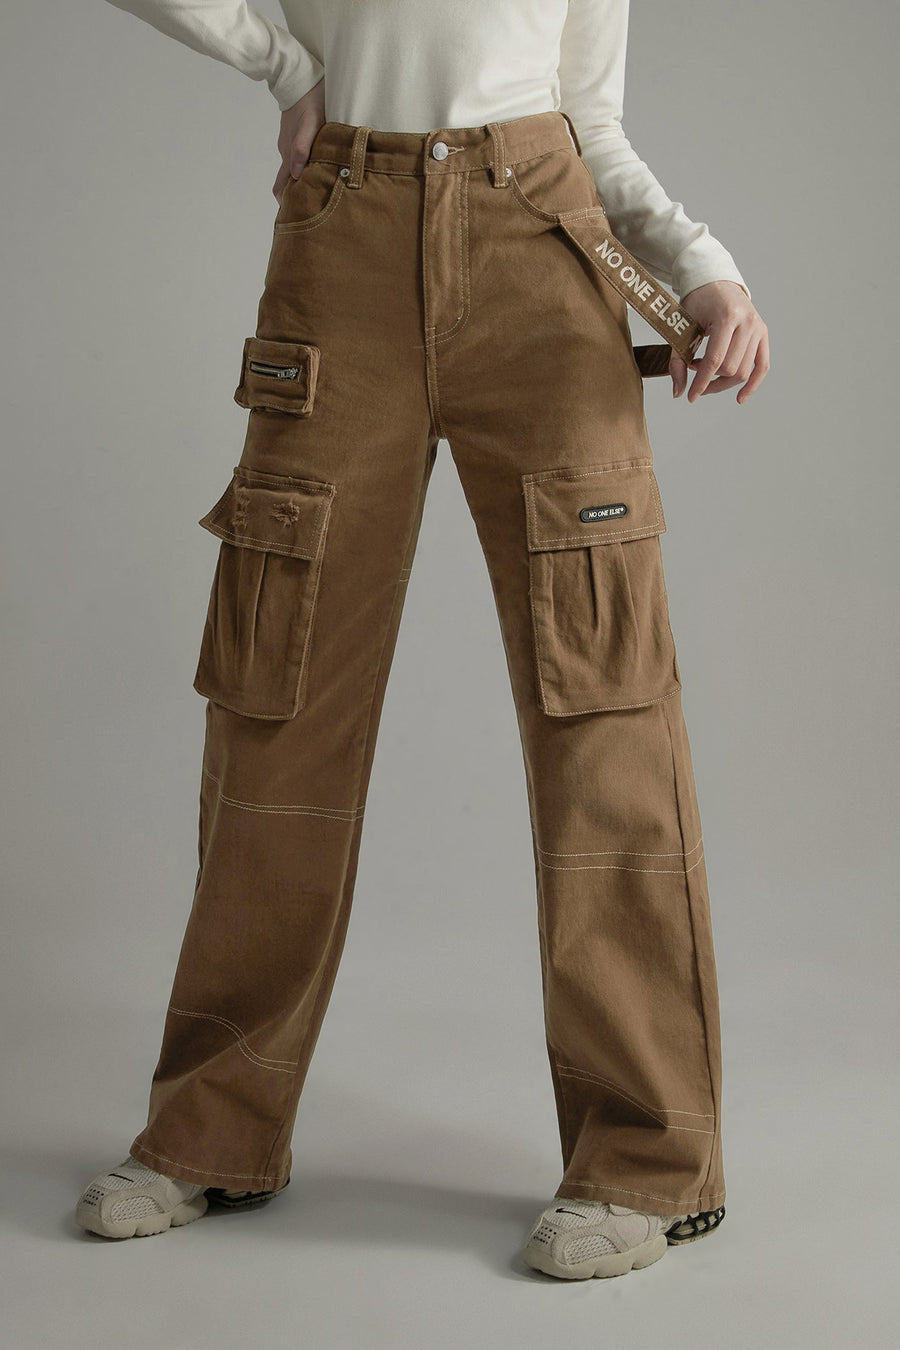 High-Waisted Cargo Slacks Pants